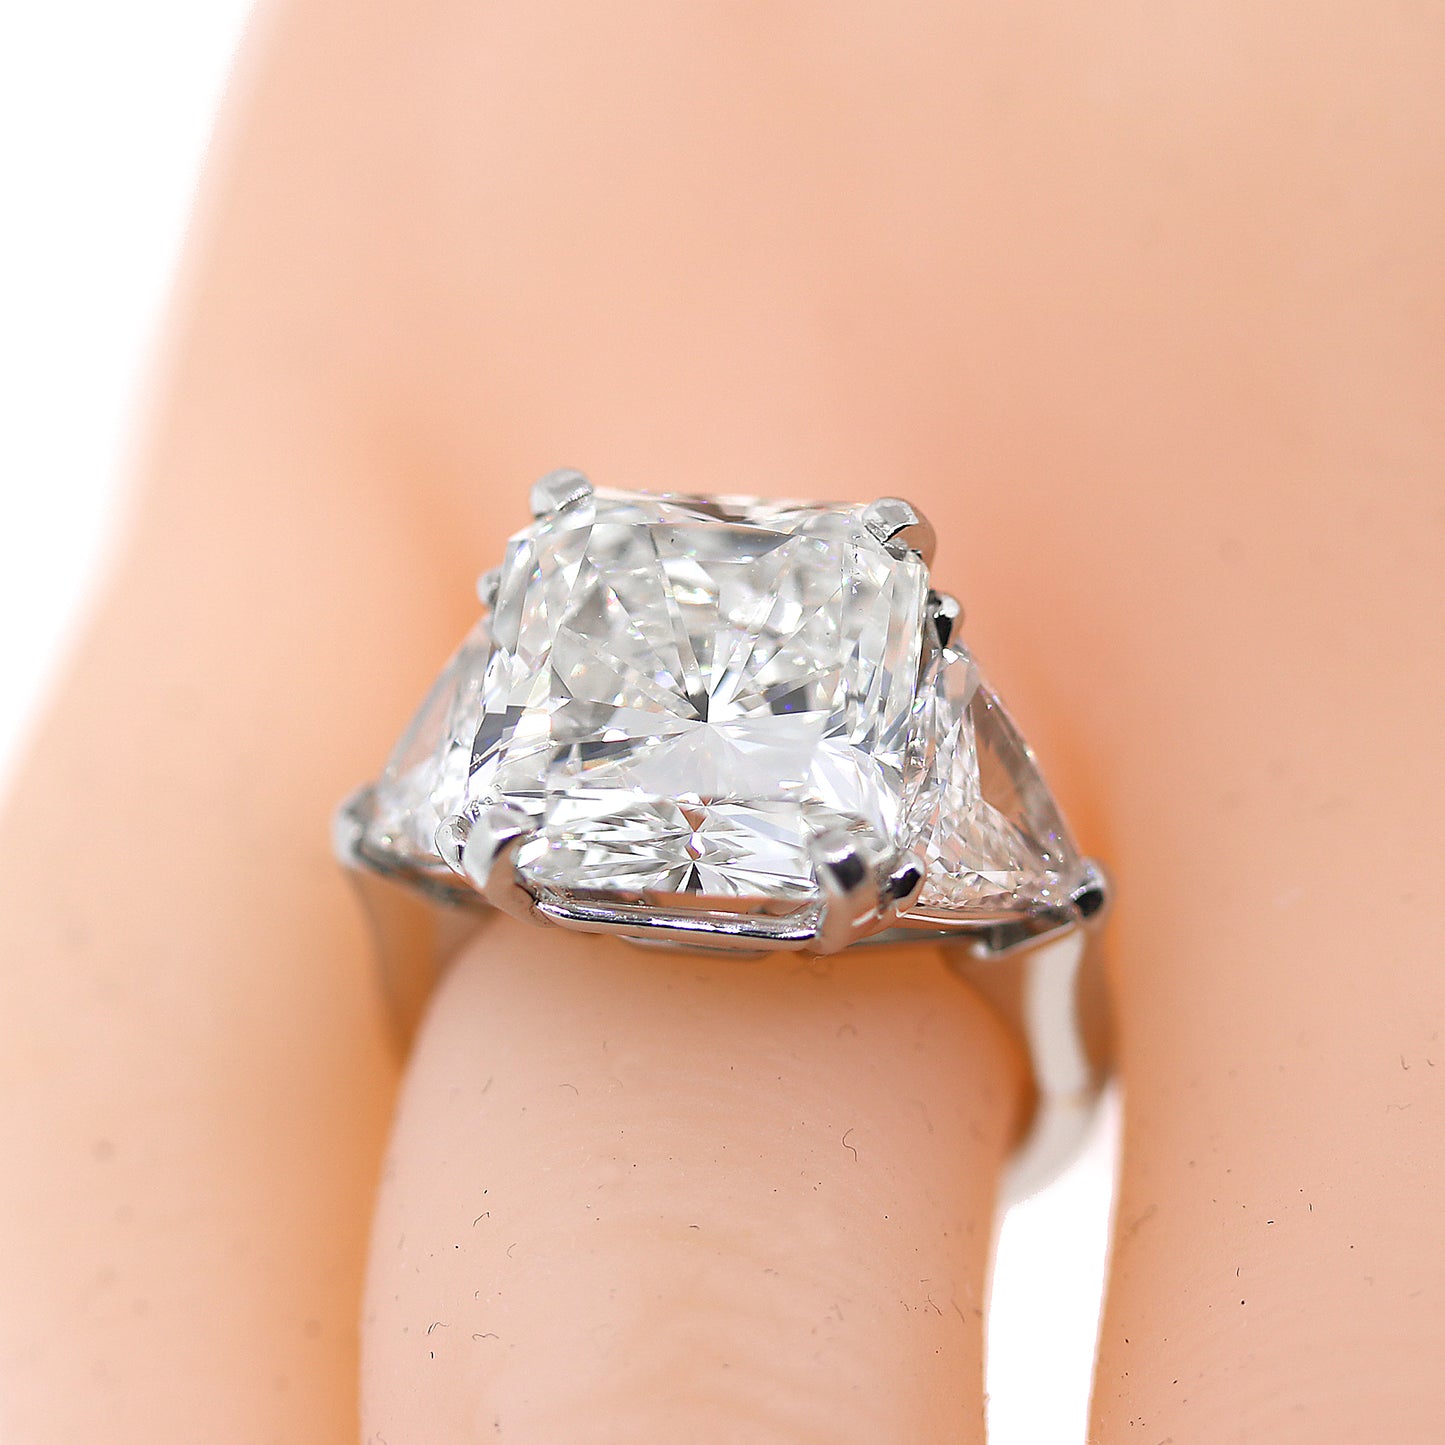 GIA Certified 9.02 carat Radiant Cut Diamond Engagement Ring in Platinum